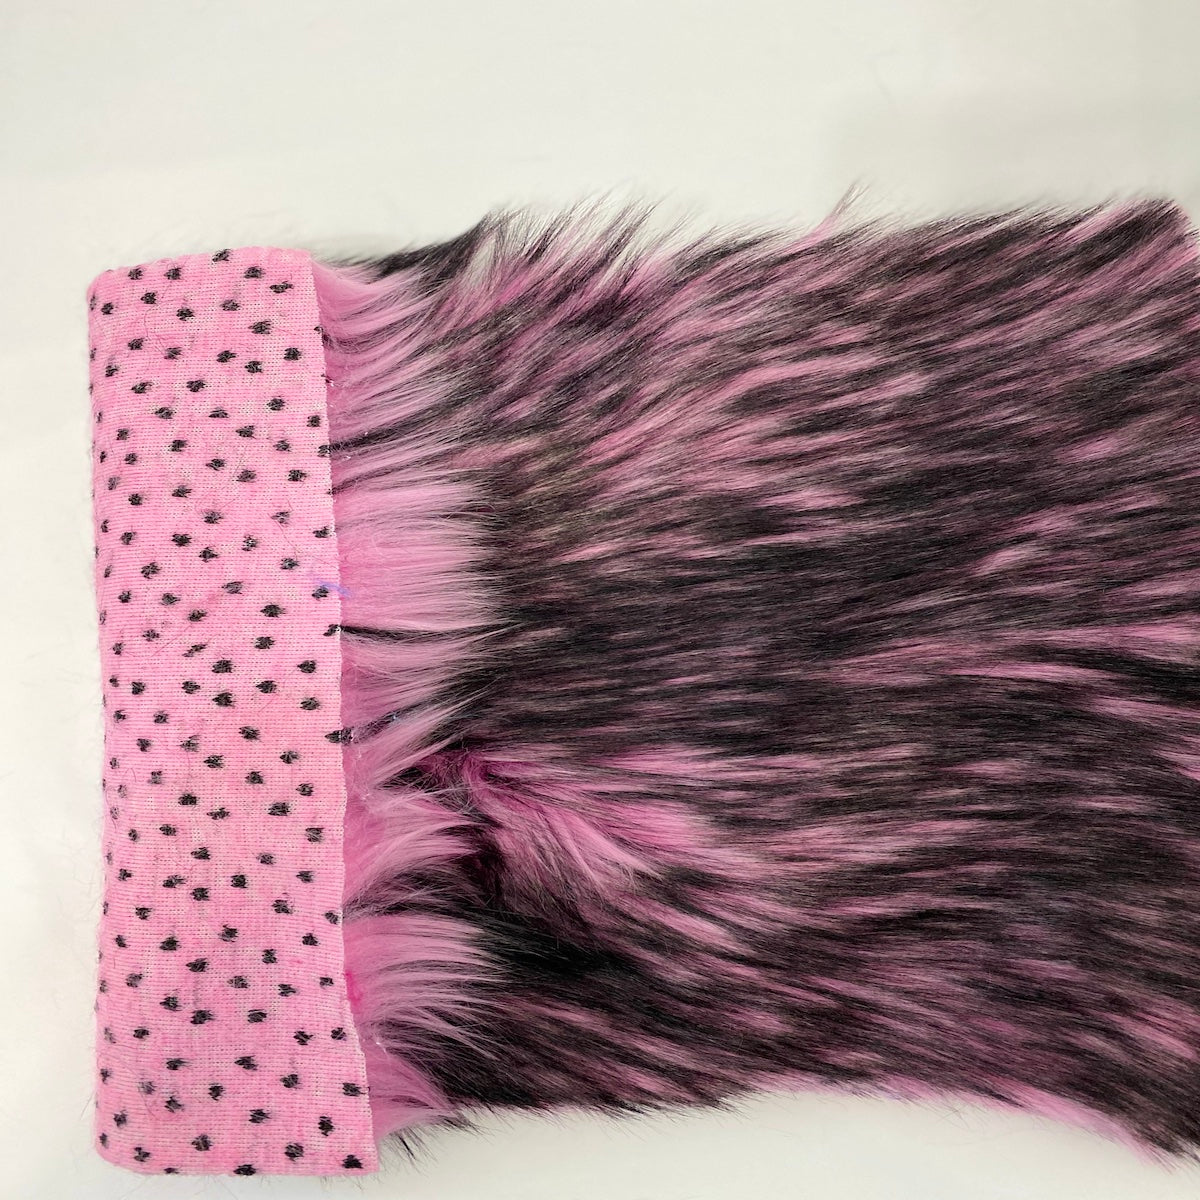 Black Faux Fur Fabric - Black and Pink Dance Supplies, Tulsa